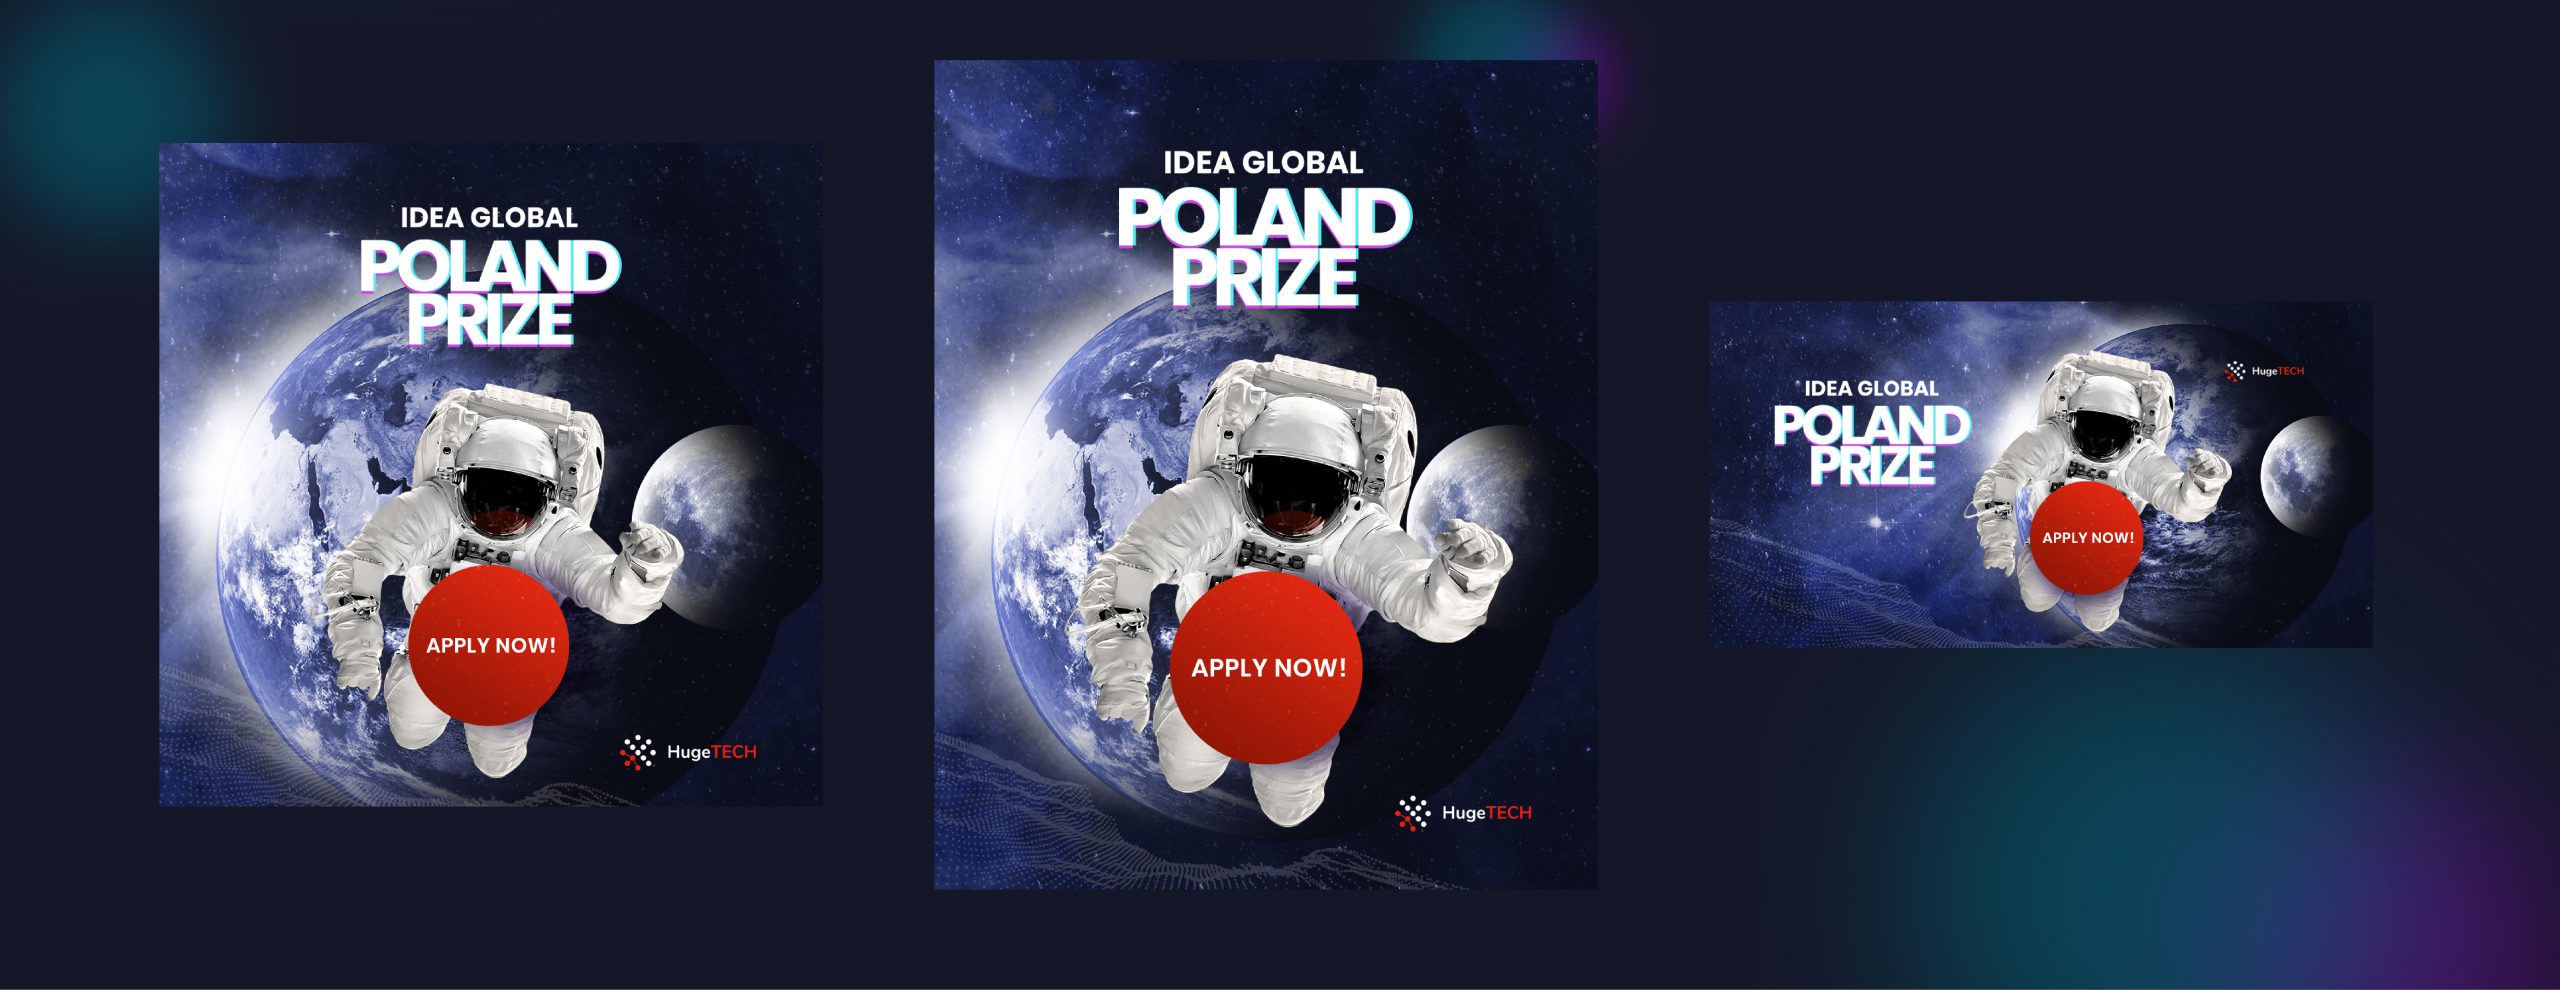 PolandPrize posty social media 2